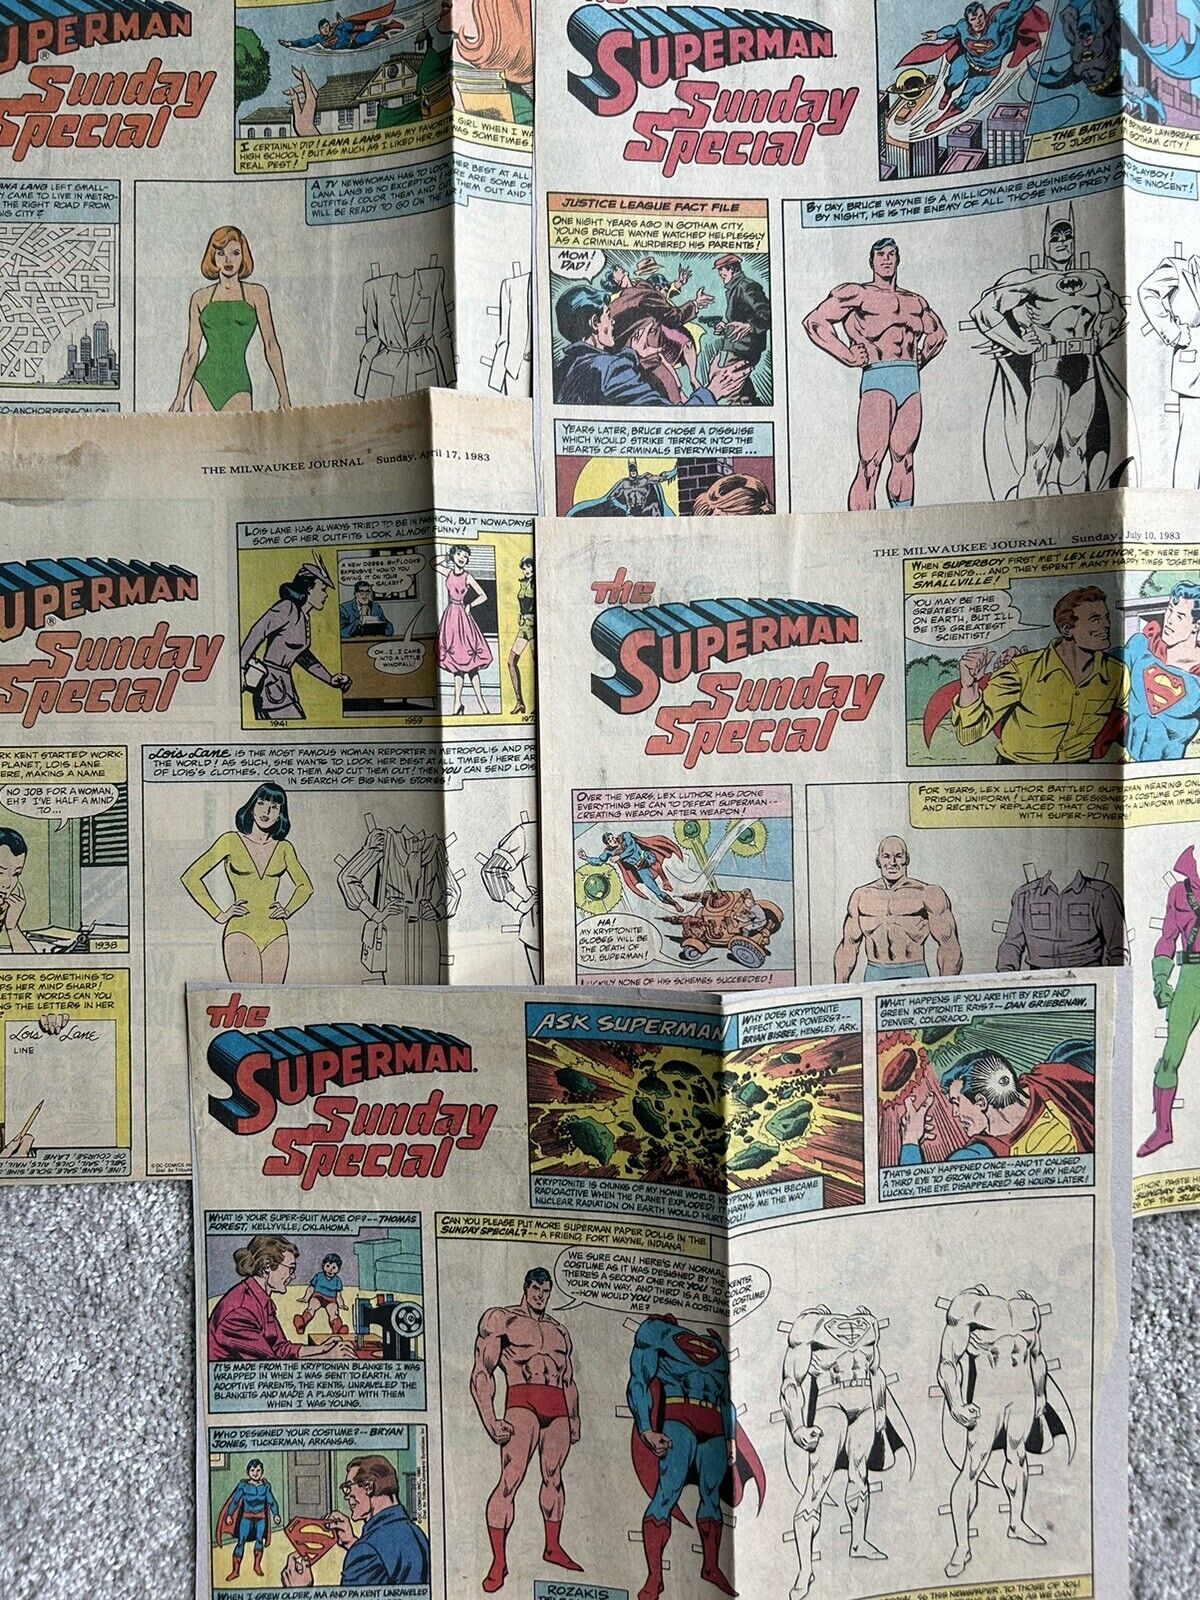 5 Vintage 1983 Superman Sunday Special Newspaper Comic Strip Paper Dolls